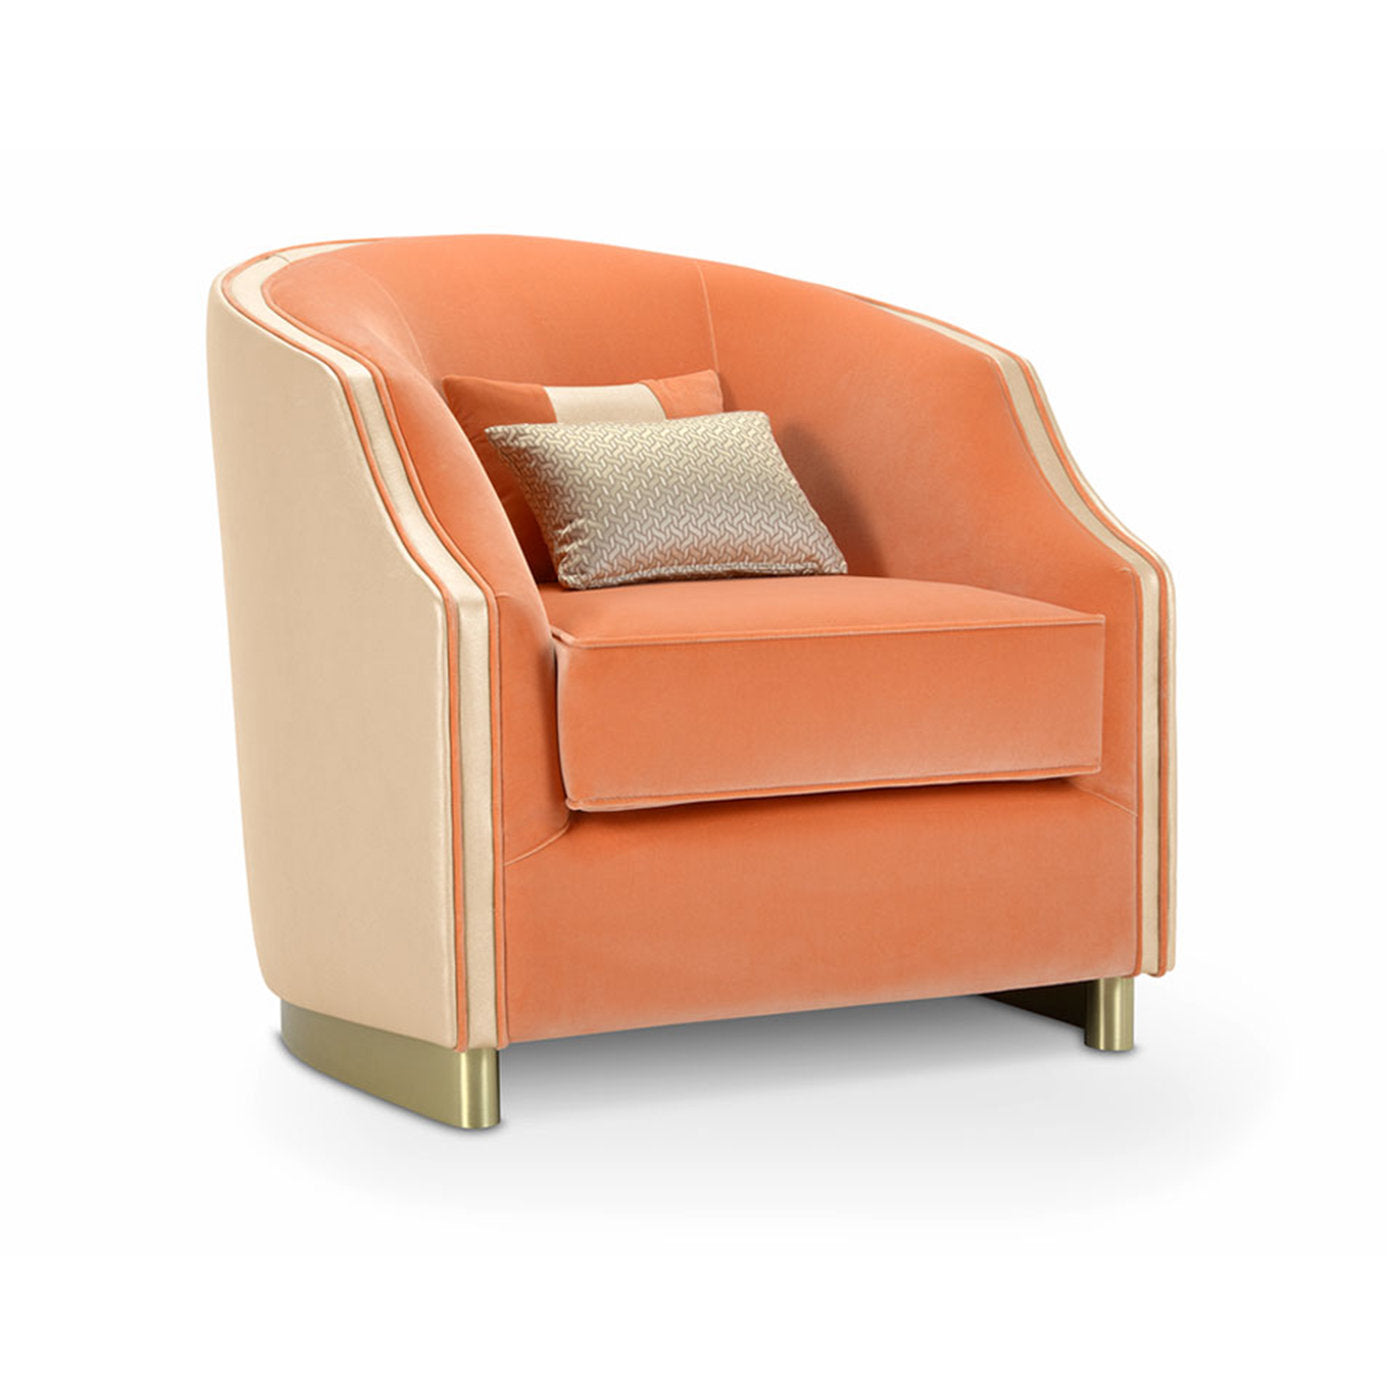 Cleio Small Orange Armchair - Alternative view 1